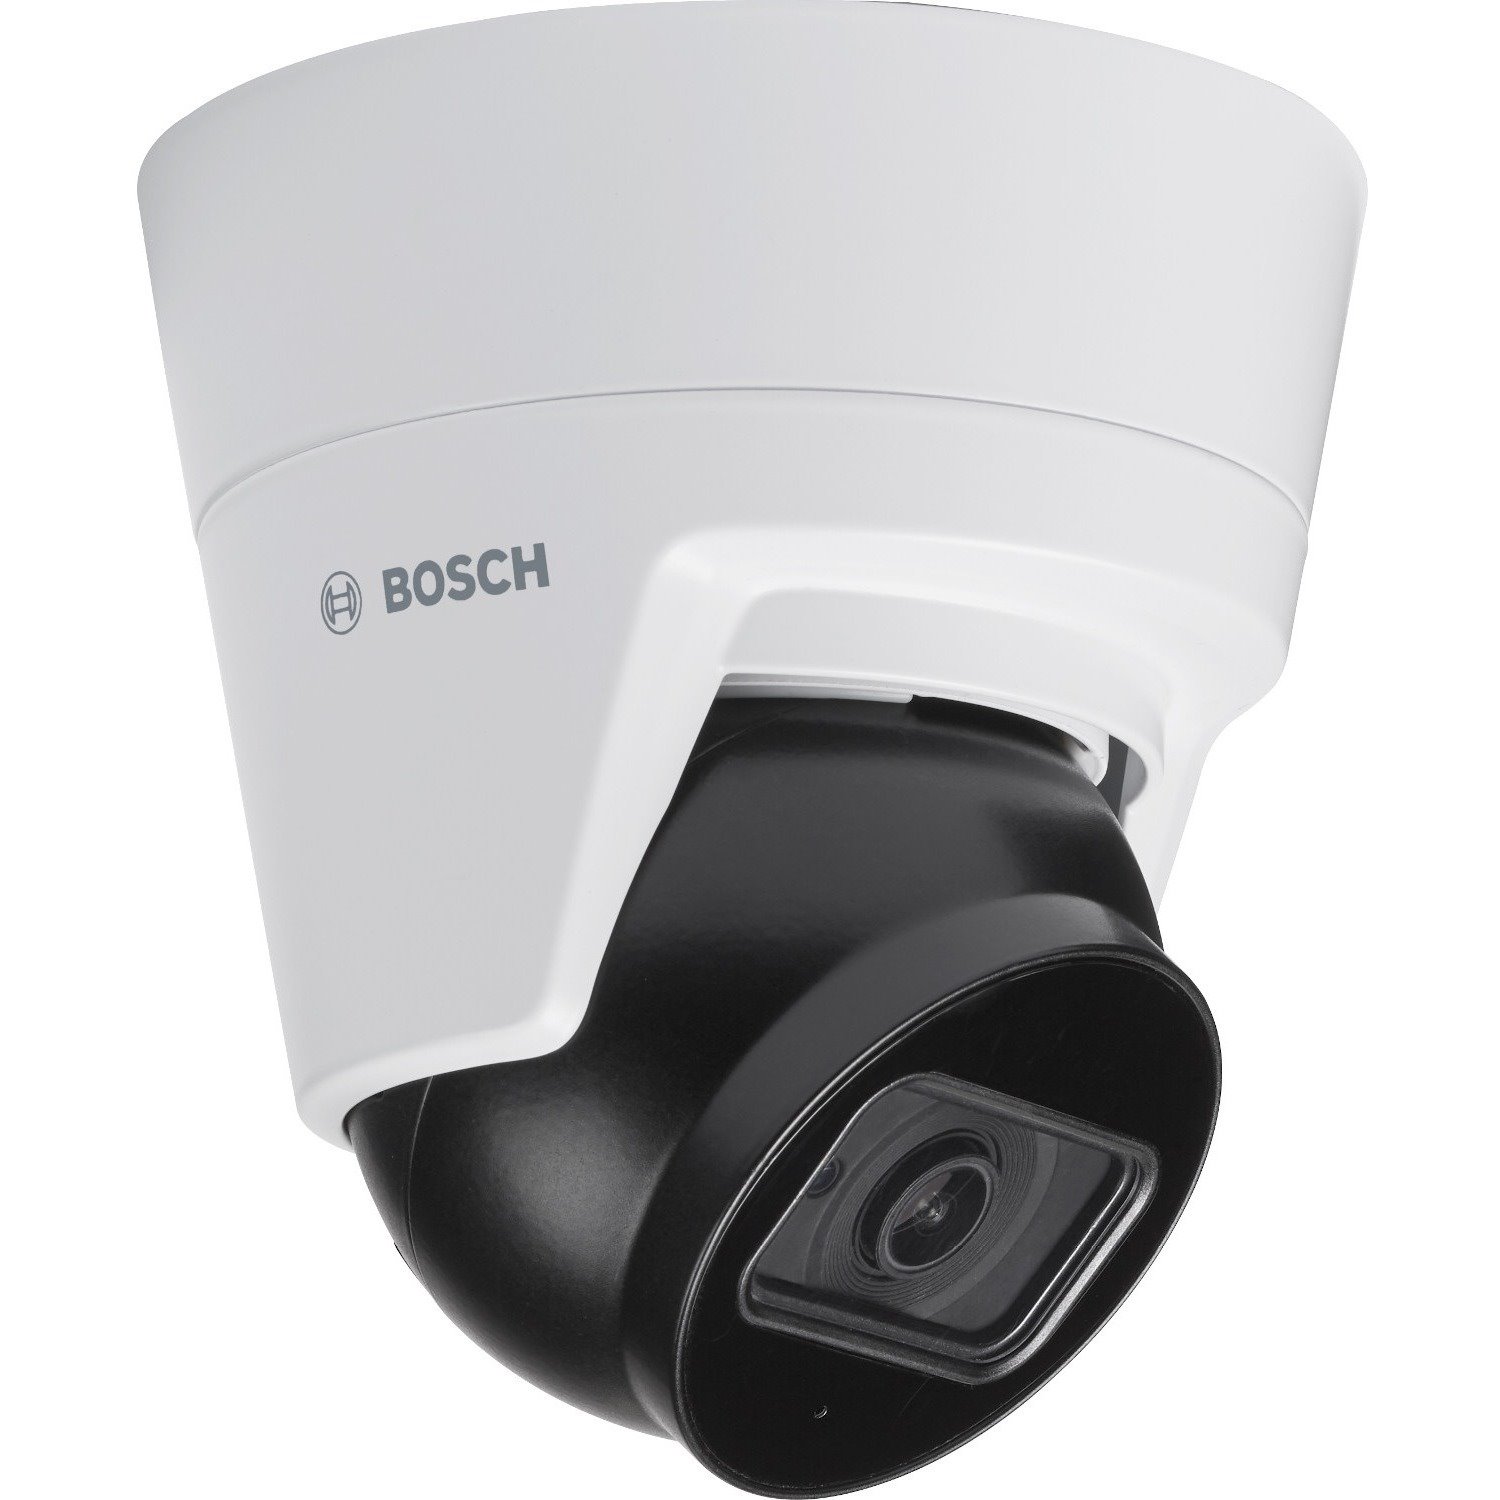 Bosch FLEXIDOME IP 5.3 Megapixel Indoor HD Network Camera - Monochrome, Color - 1 Pack - Turret